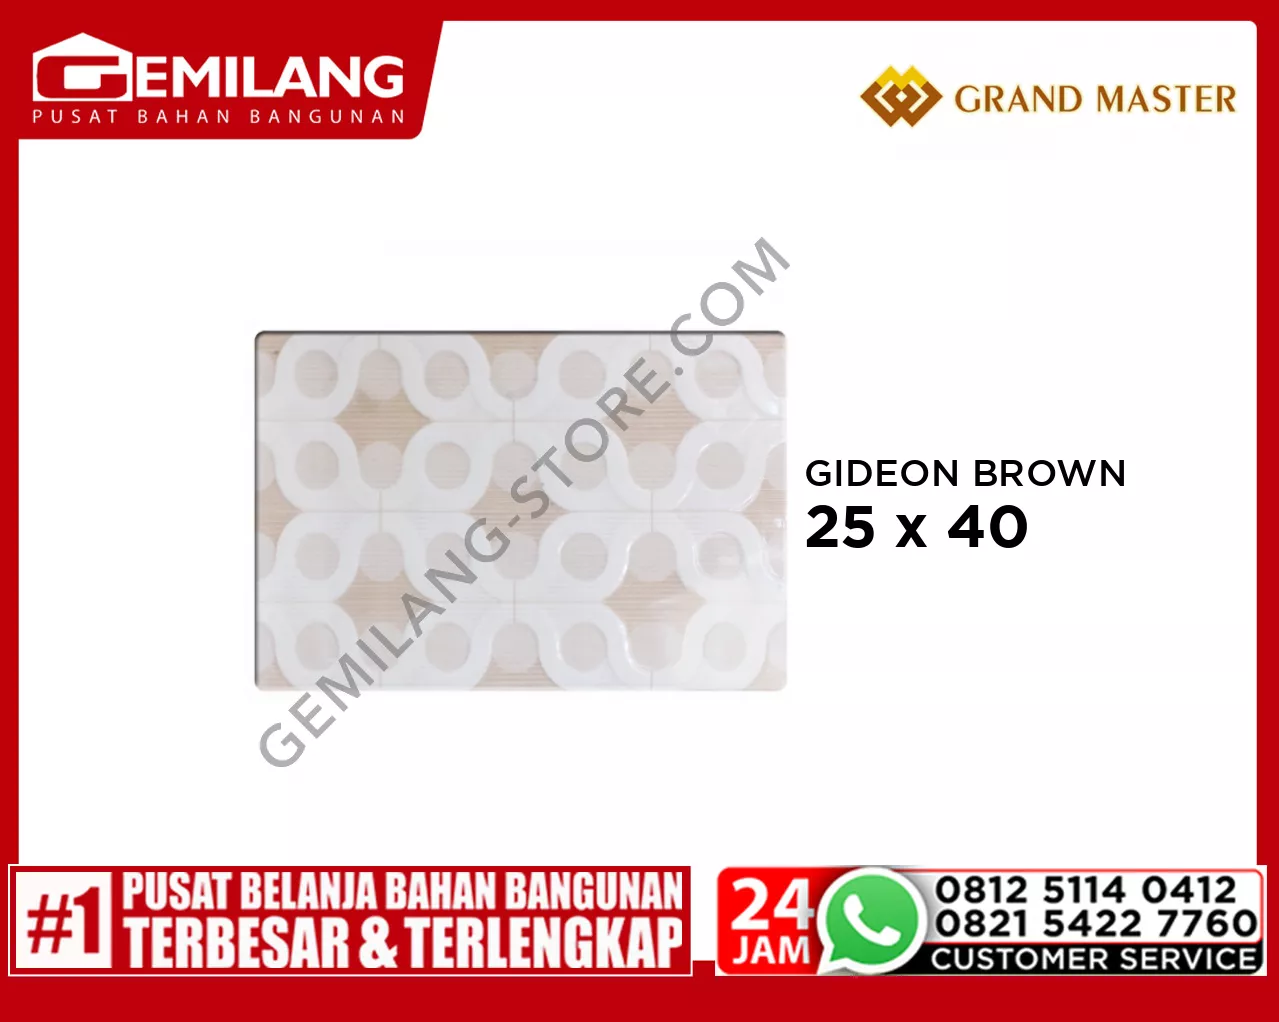 GRAND MASTER GIDEON BROWN 25 x 40